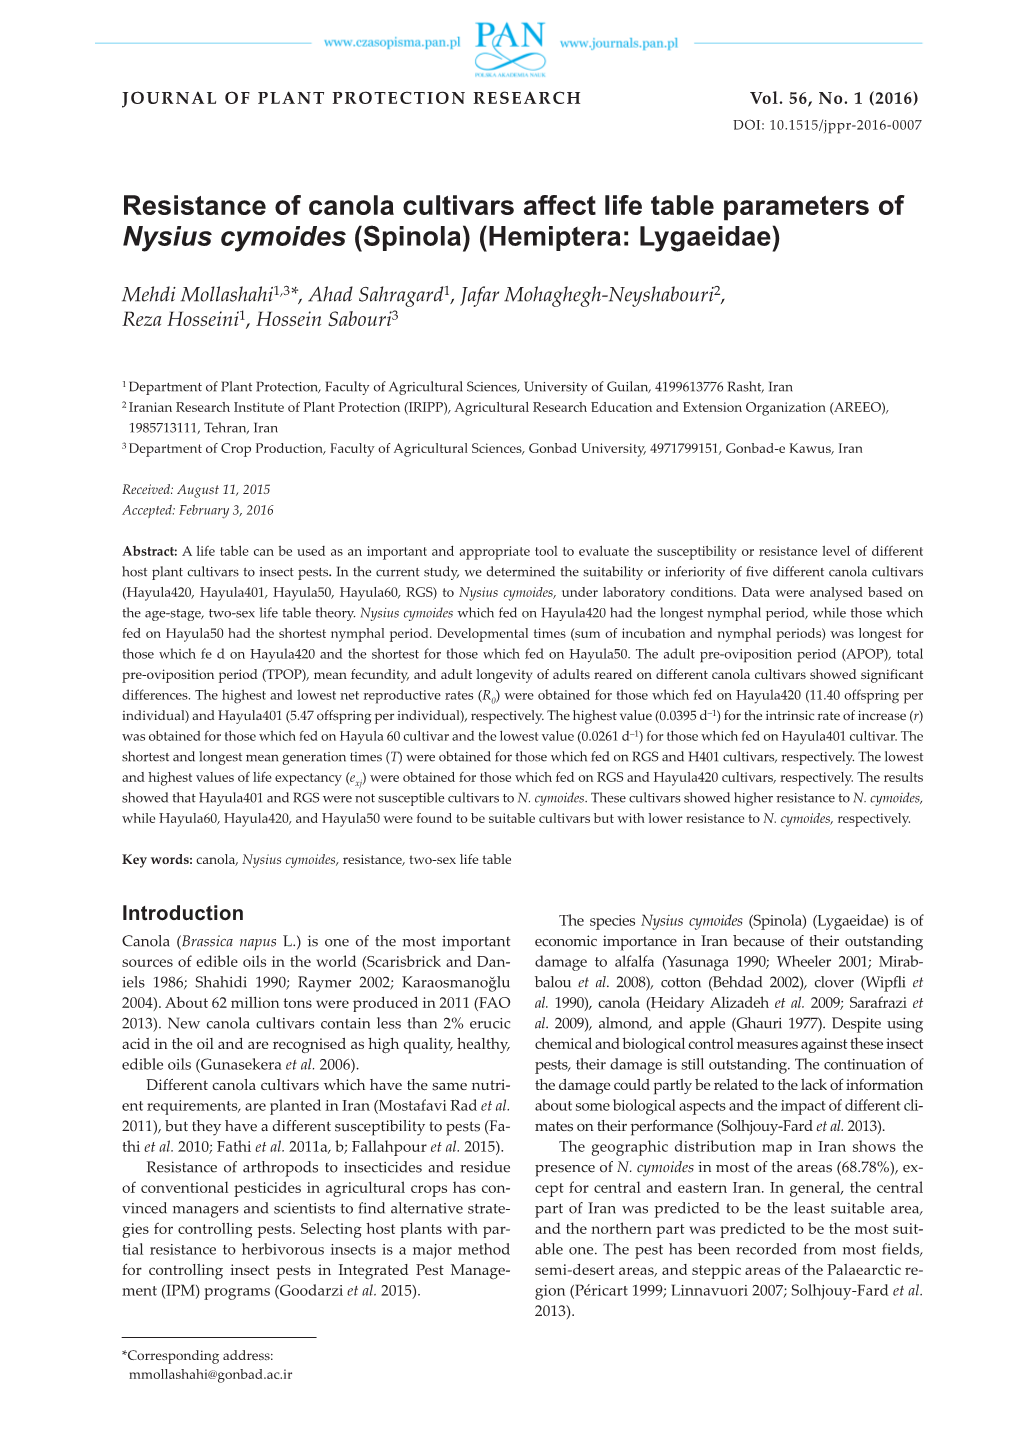 Resistance of Canola Cultivars Affect Life Table Parameters of Nysius Cymoides (Spinola)(Hemiptera: Lygaeidae)